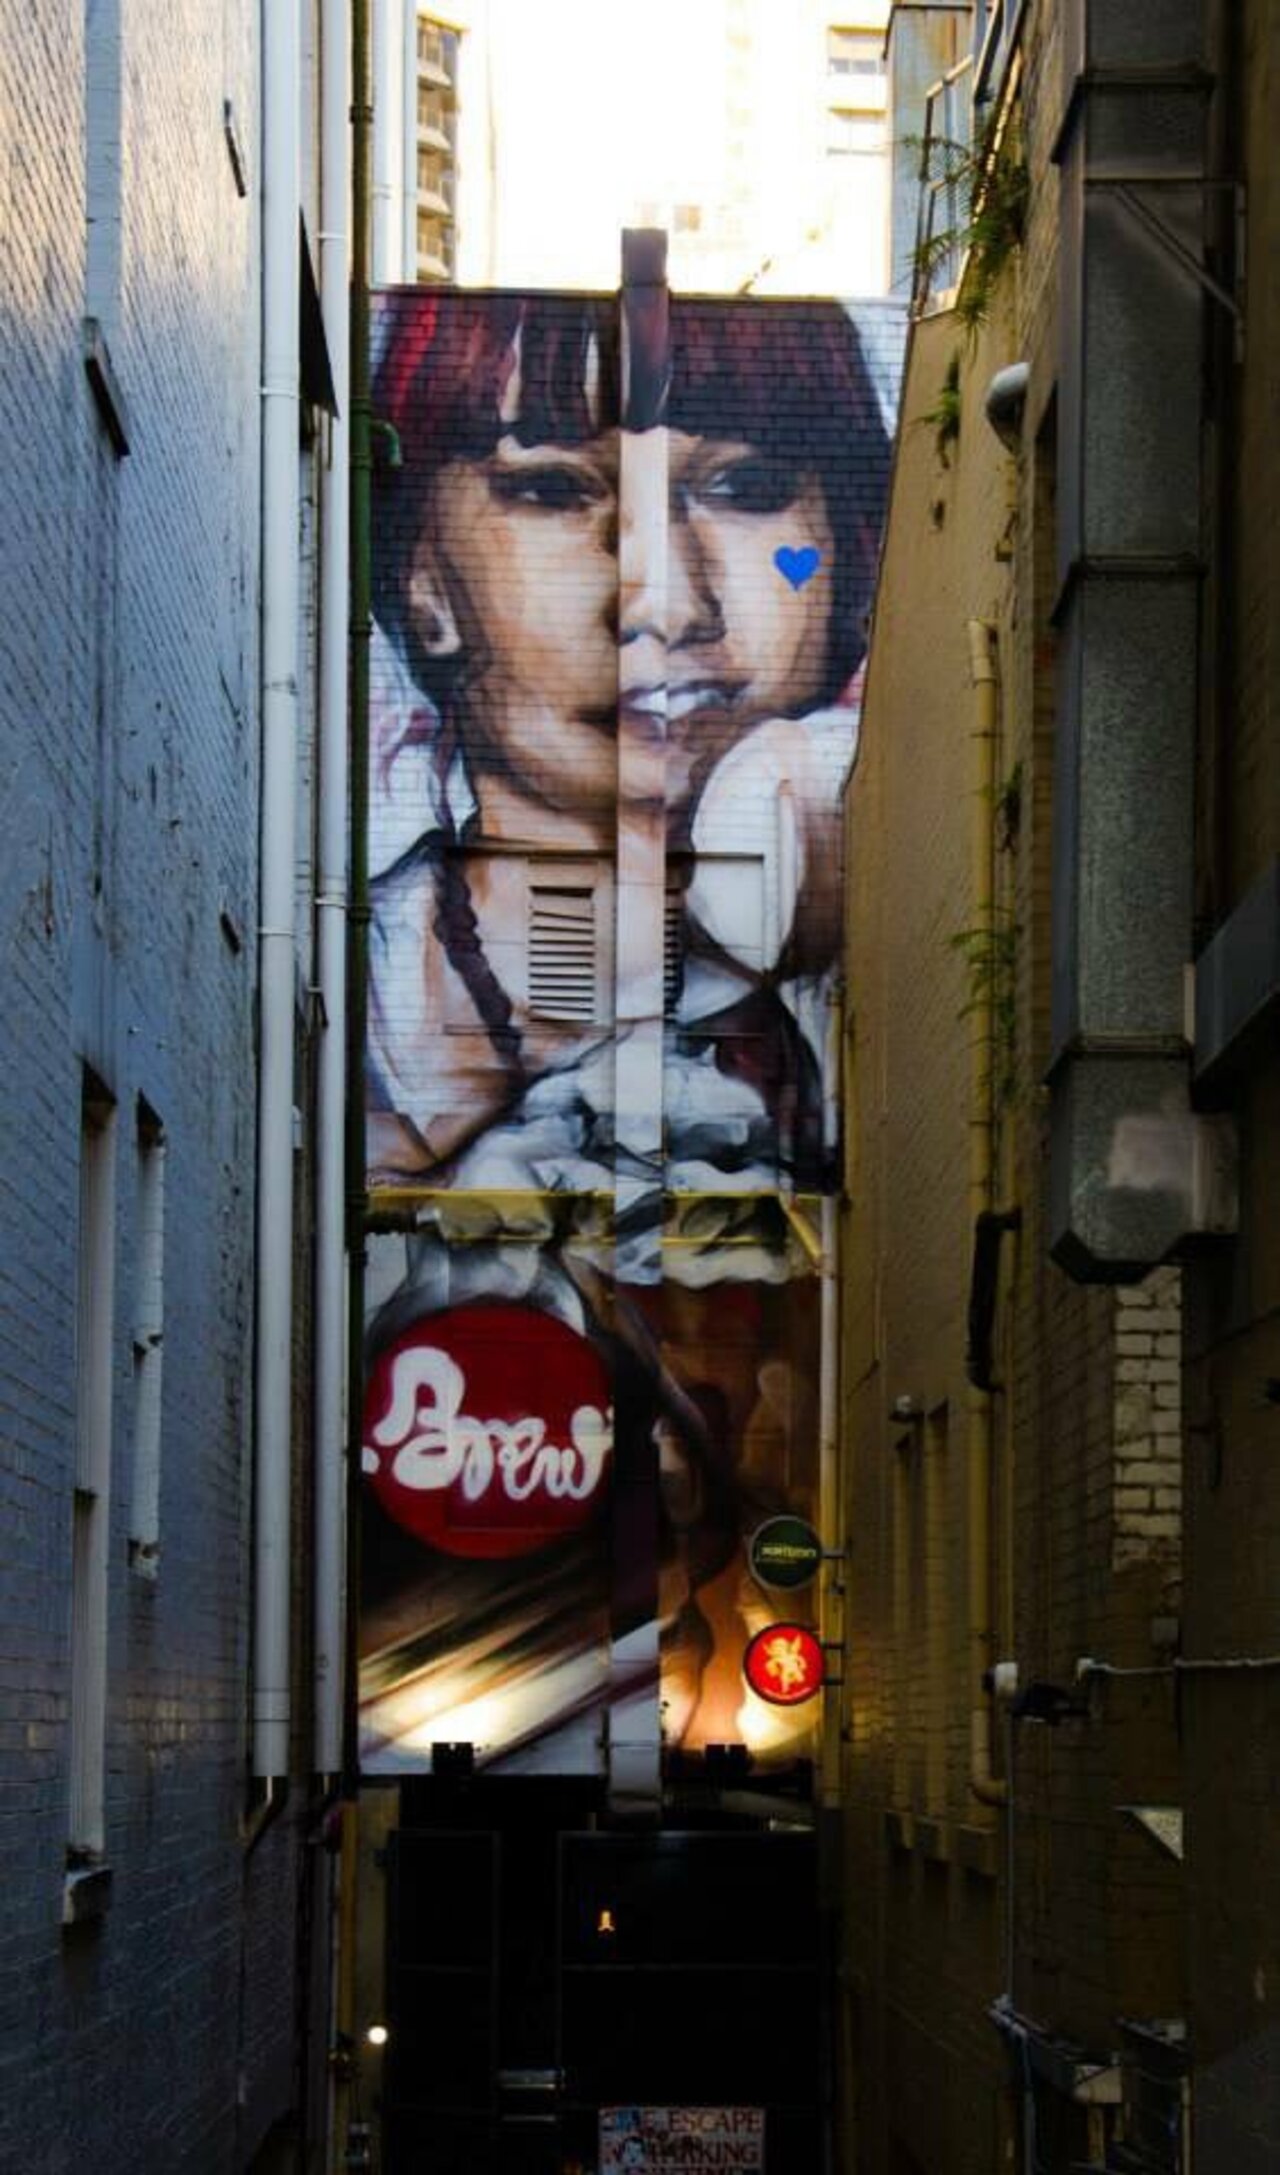 Brisbane, Australia #Streetart #urbanart #graffiti #mural #art #brisbane #Australia https://t.co/kllM2nJDMc